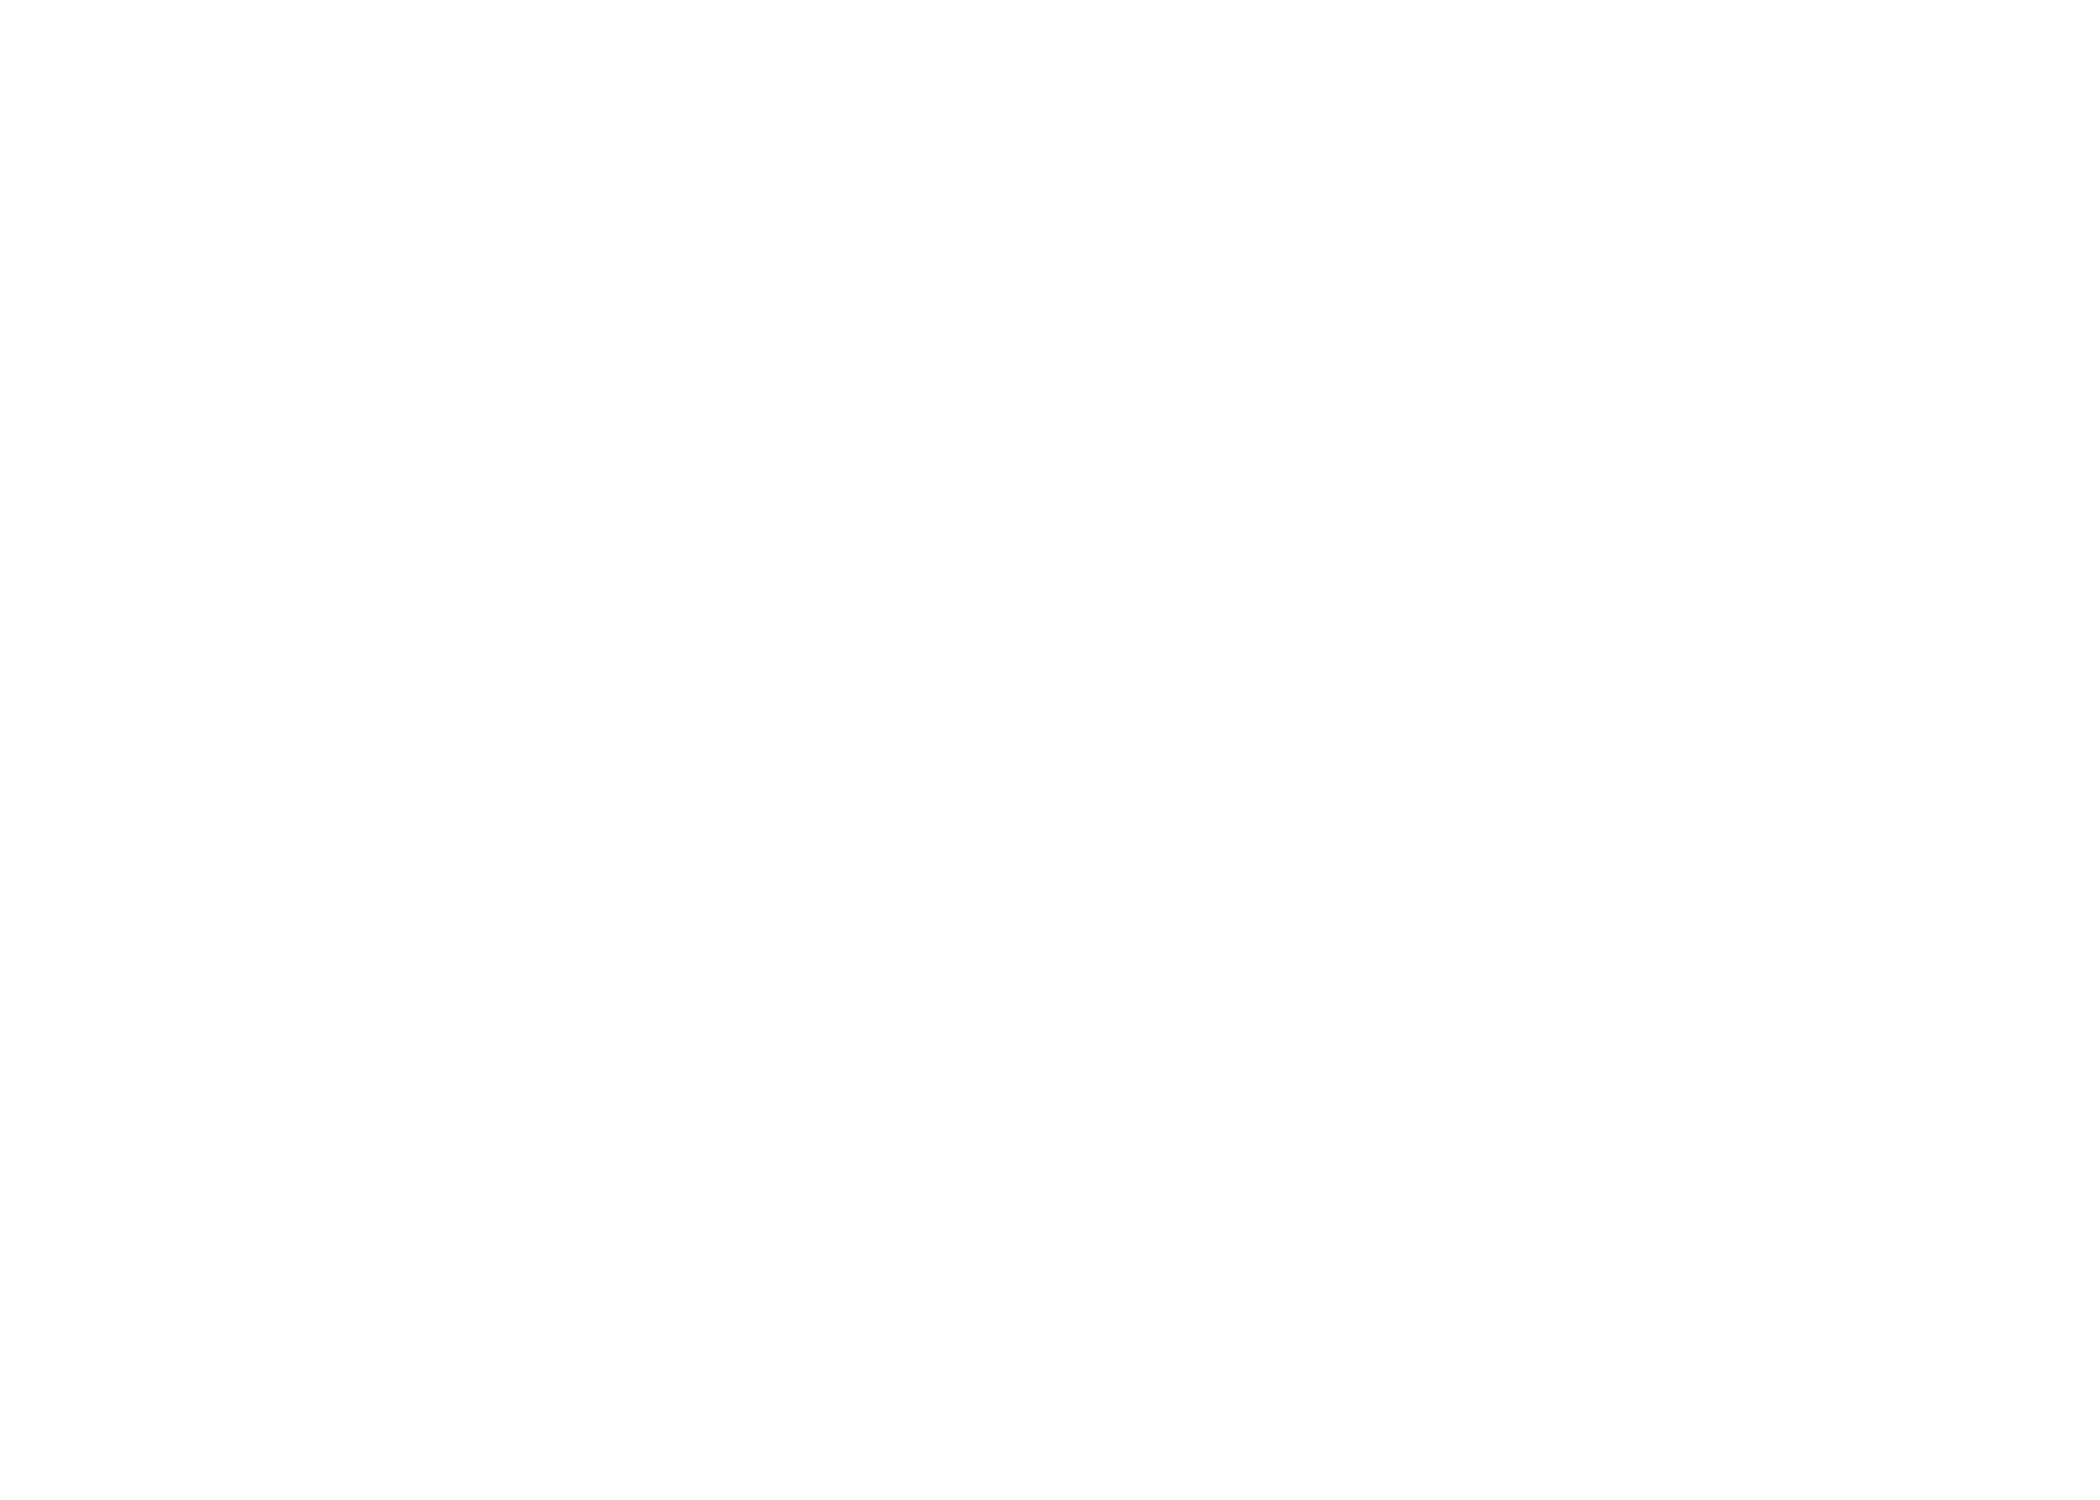 NumberHound